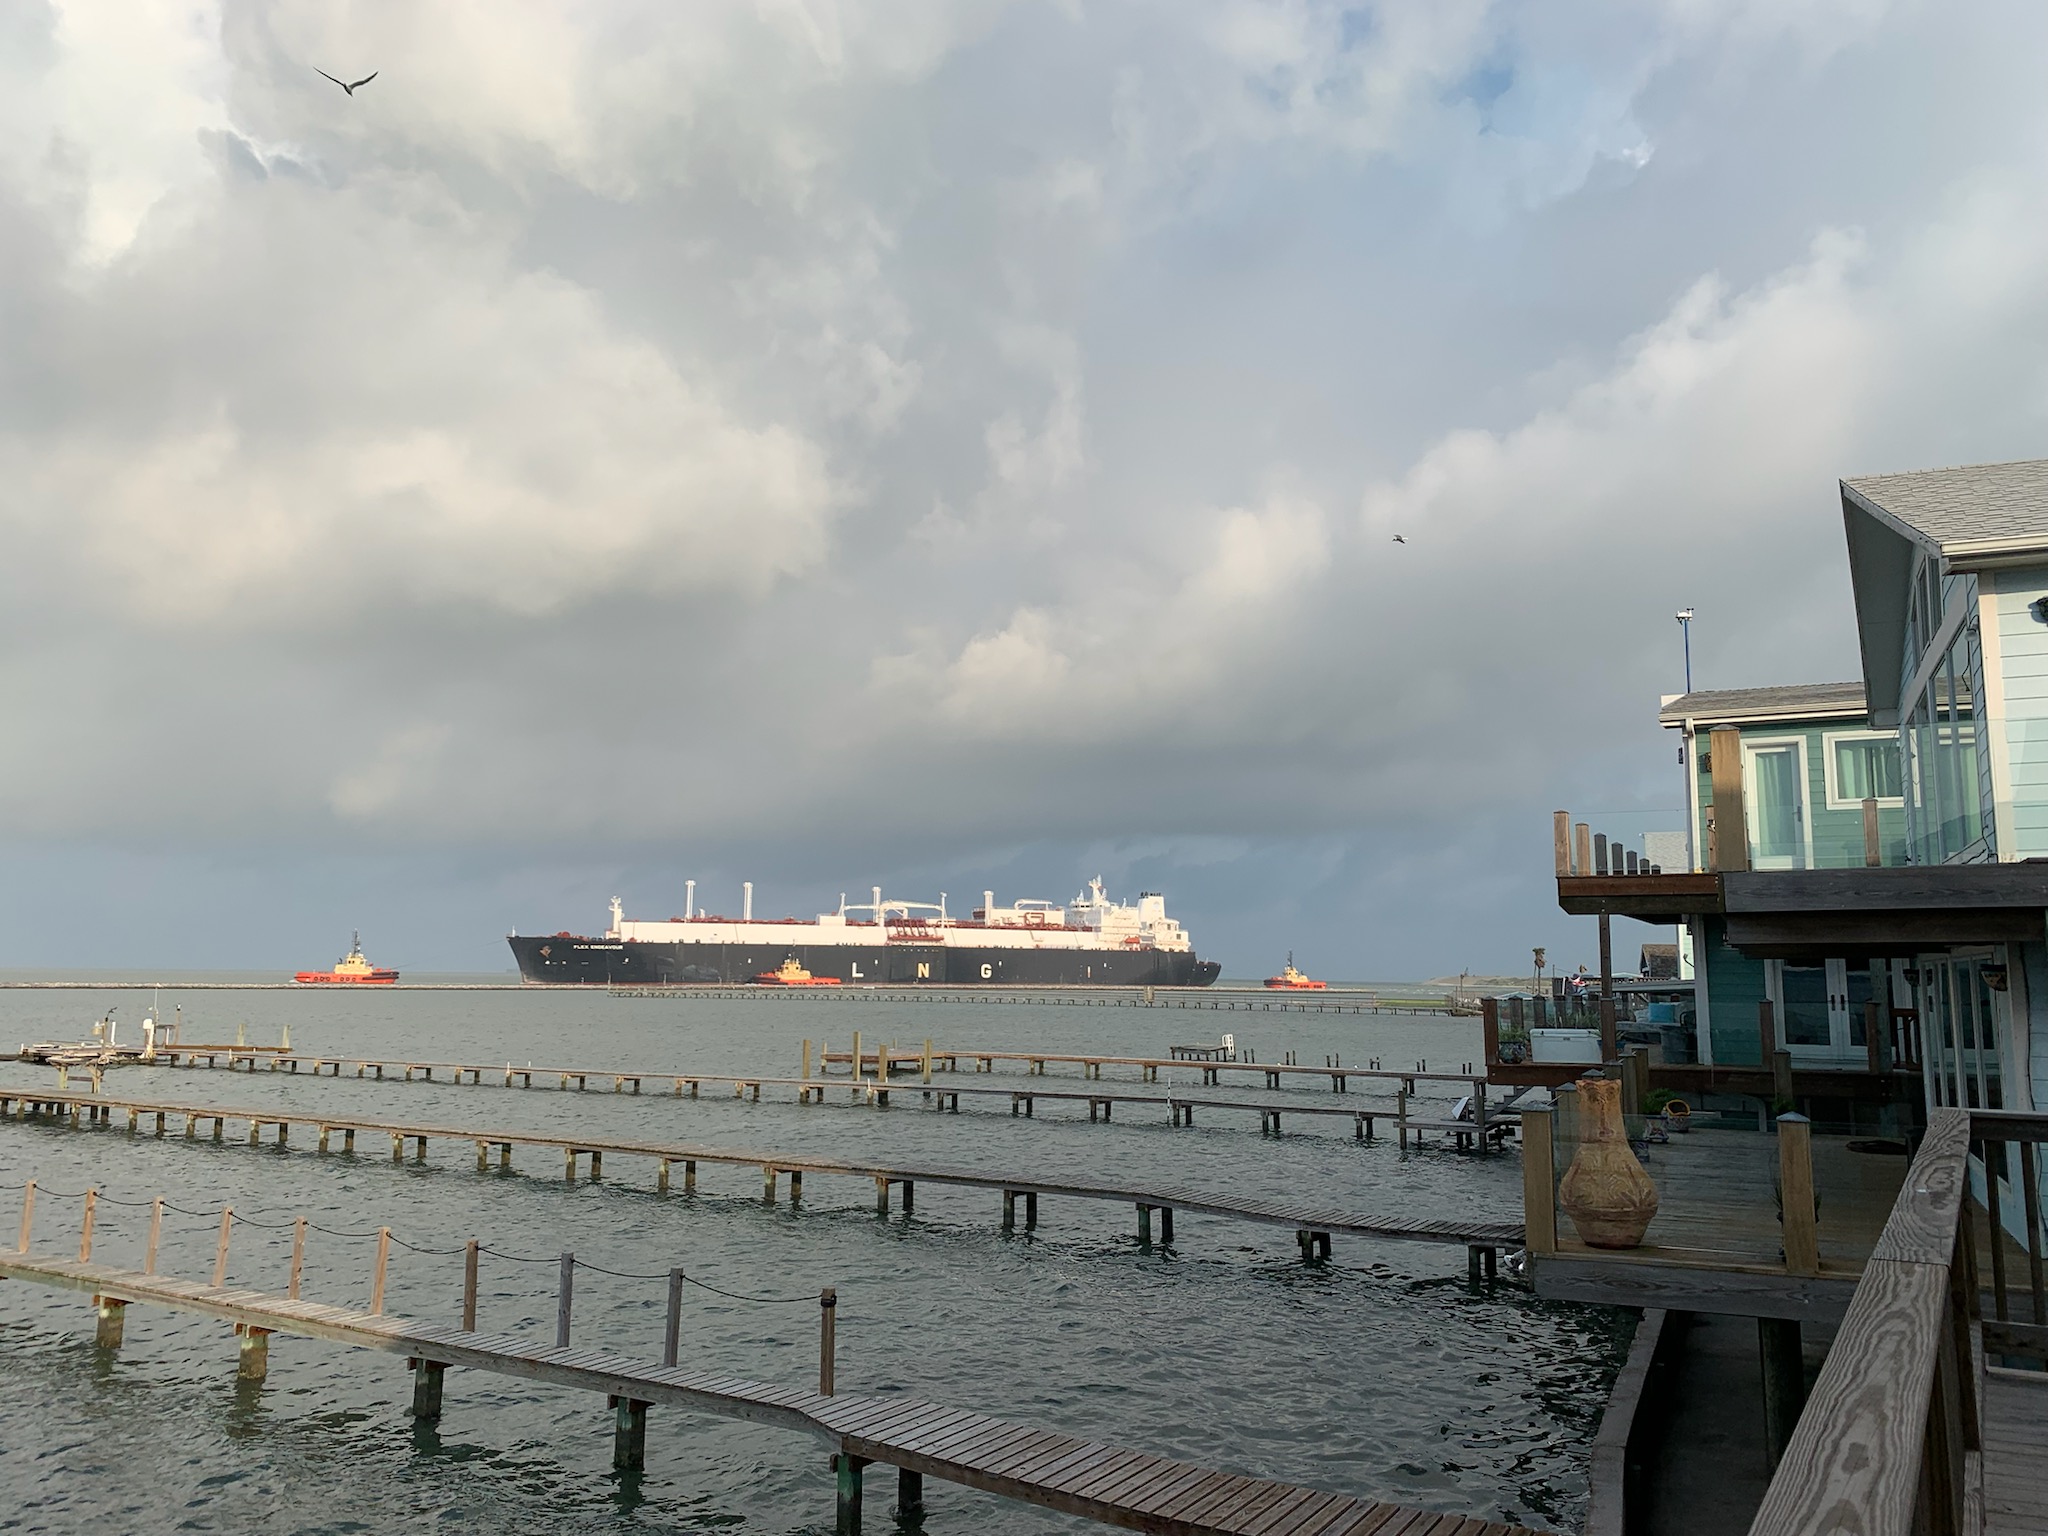 Corpus Christi LNG tanker ship leaving Port of Corpus Christi Bay. Photo by Bekah Hinojosa